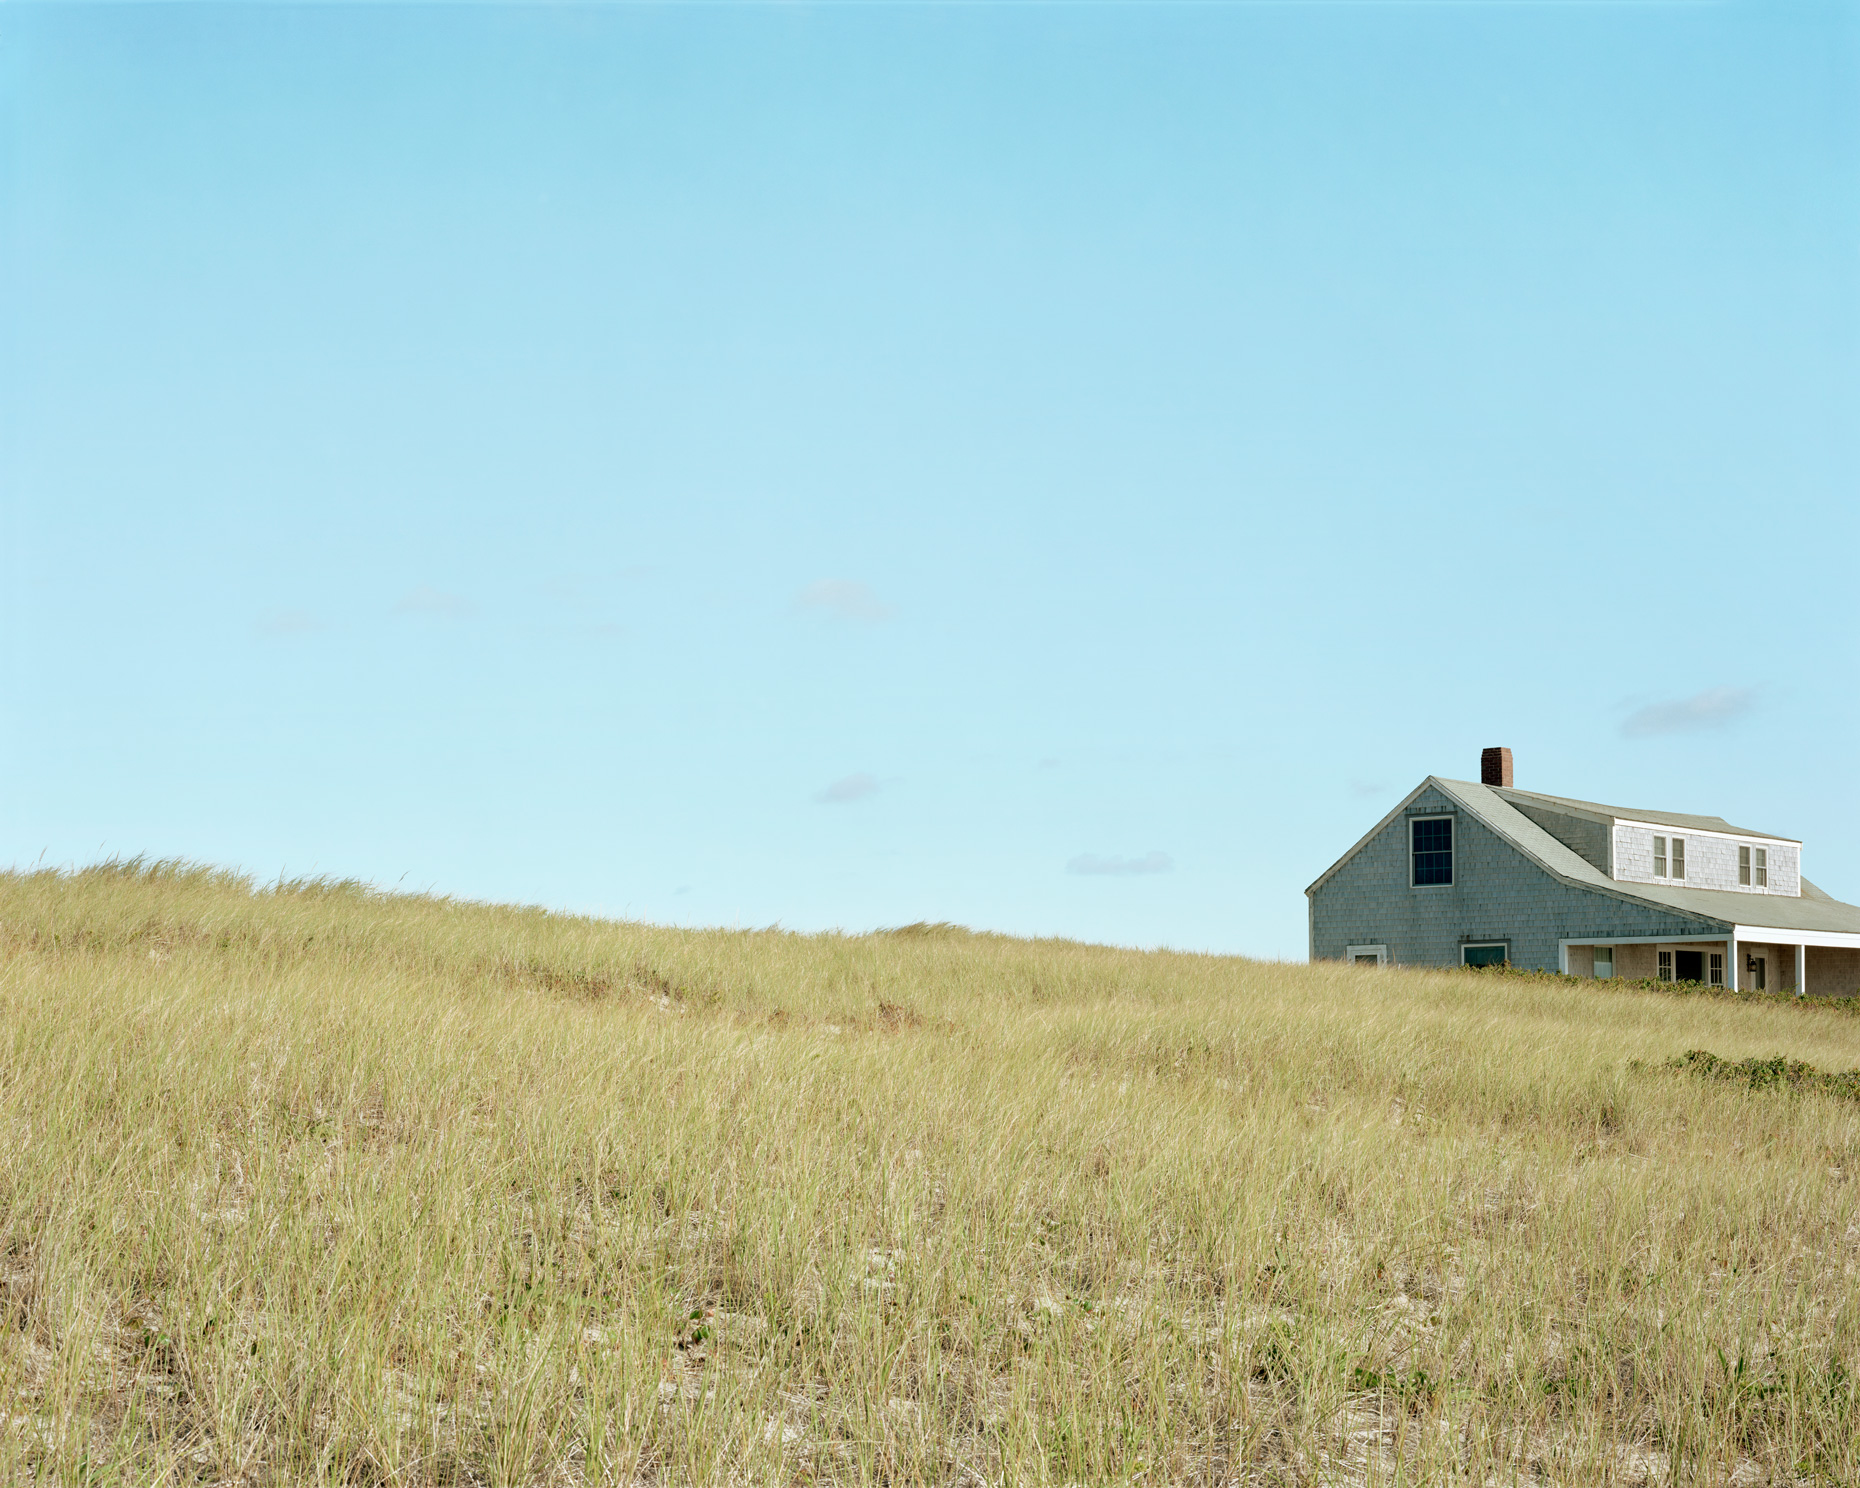 House on the Hill  |  Nantucket  |  Michael Gaillard